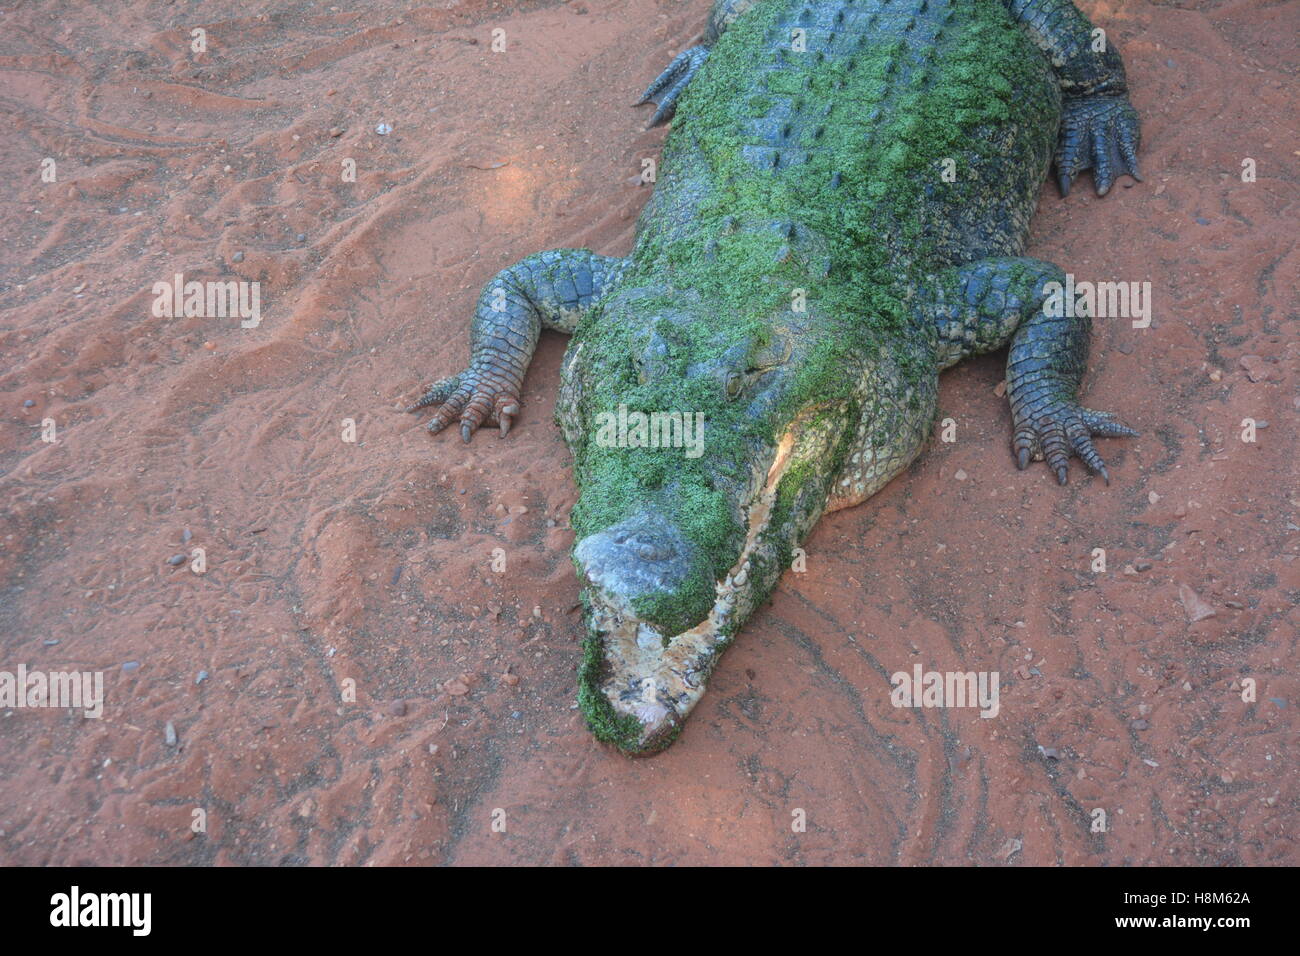 Large crocodile in Australia Stock Photo